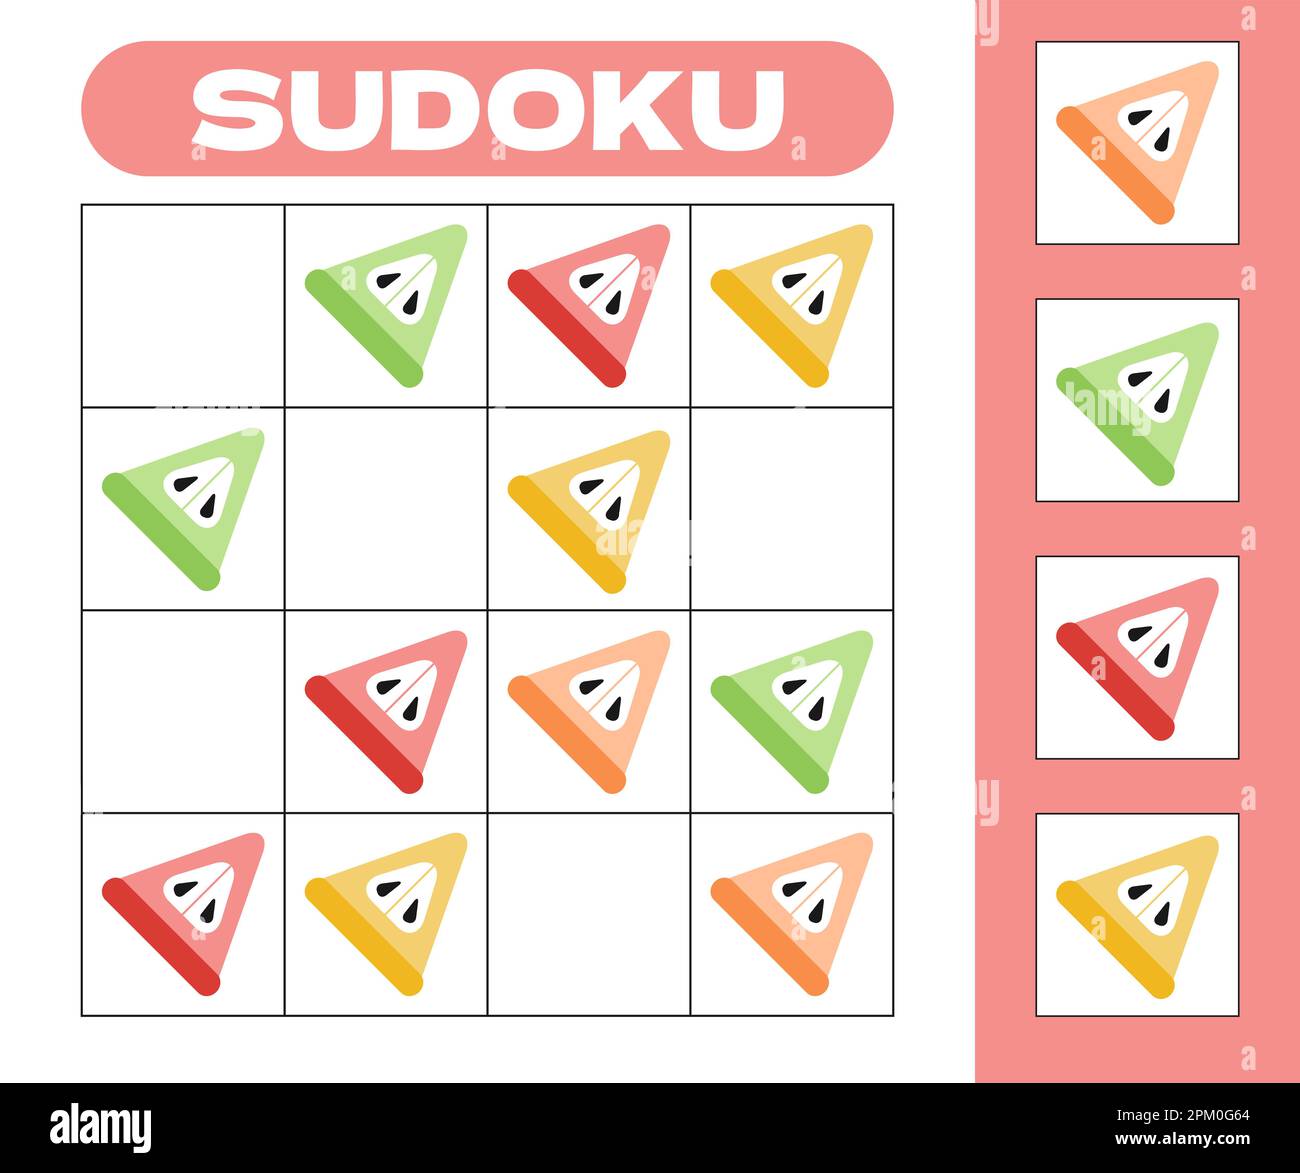 Sudoku 4x4  Live Worksheets